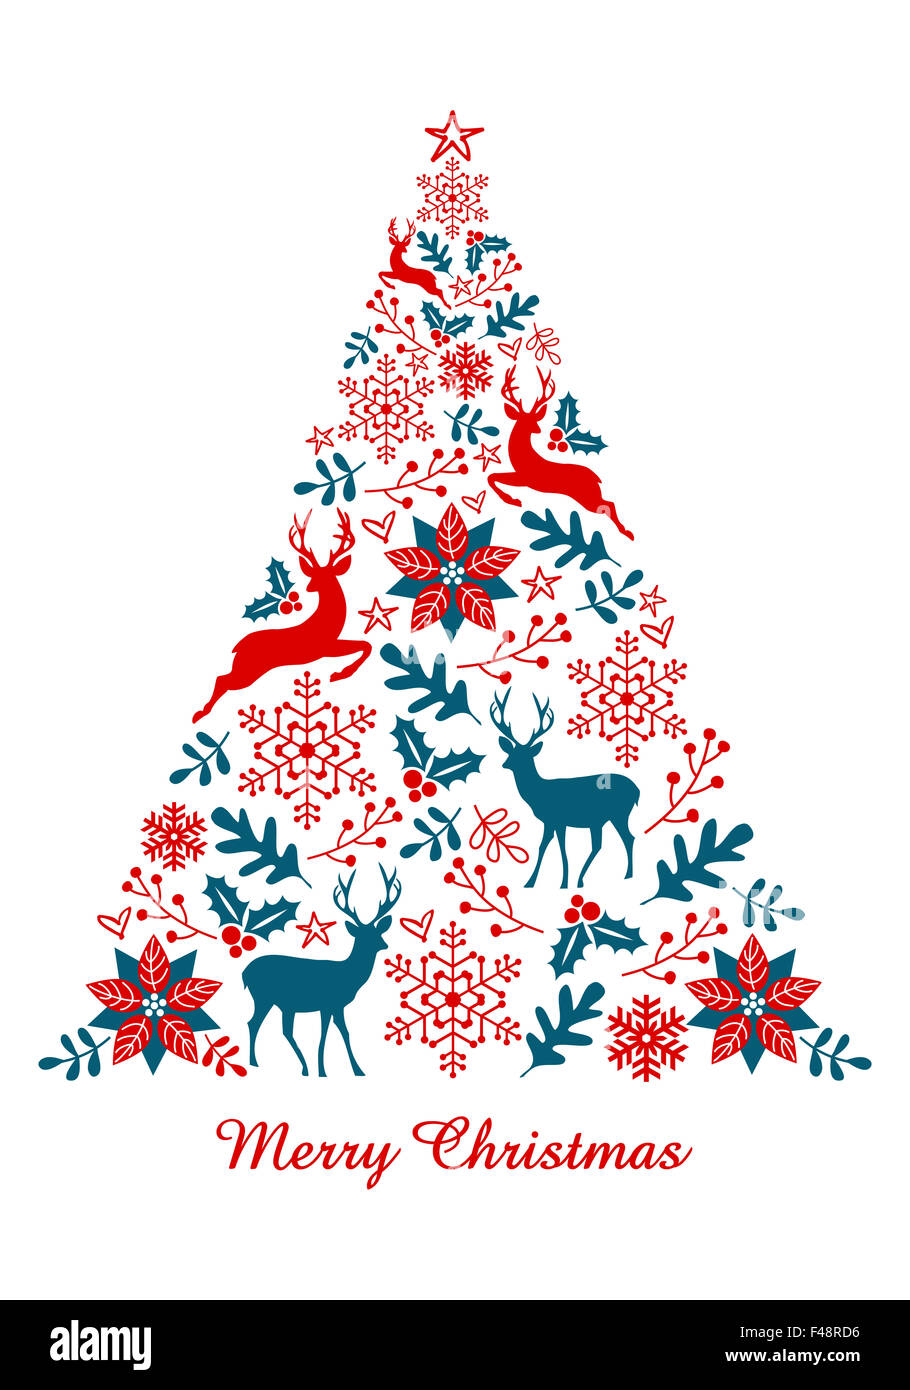 Christmas card with abstract ornamental Xmas tree Stock Photo